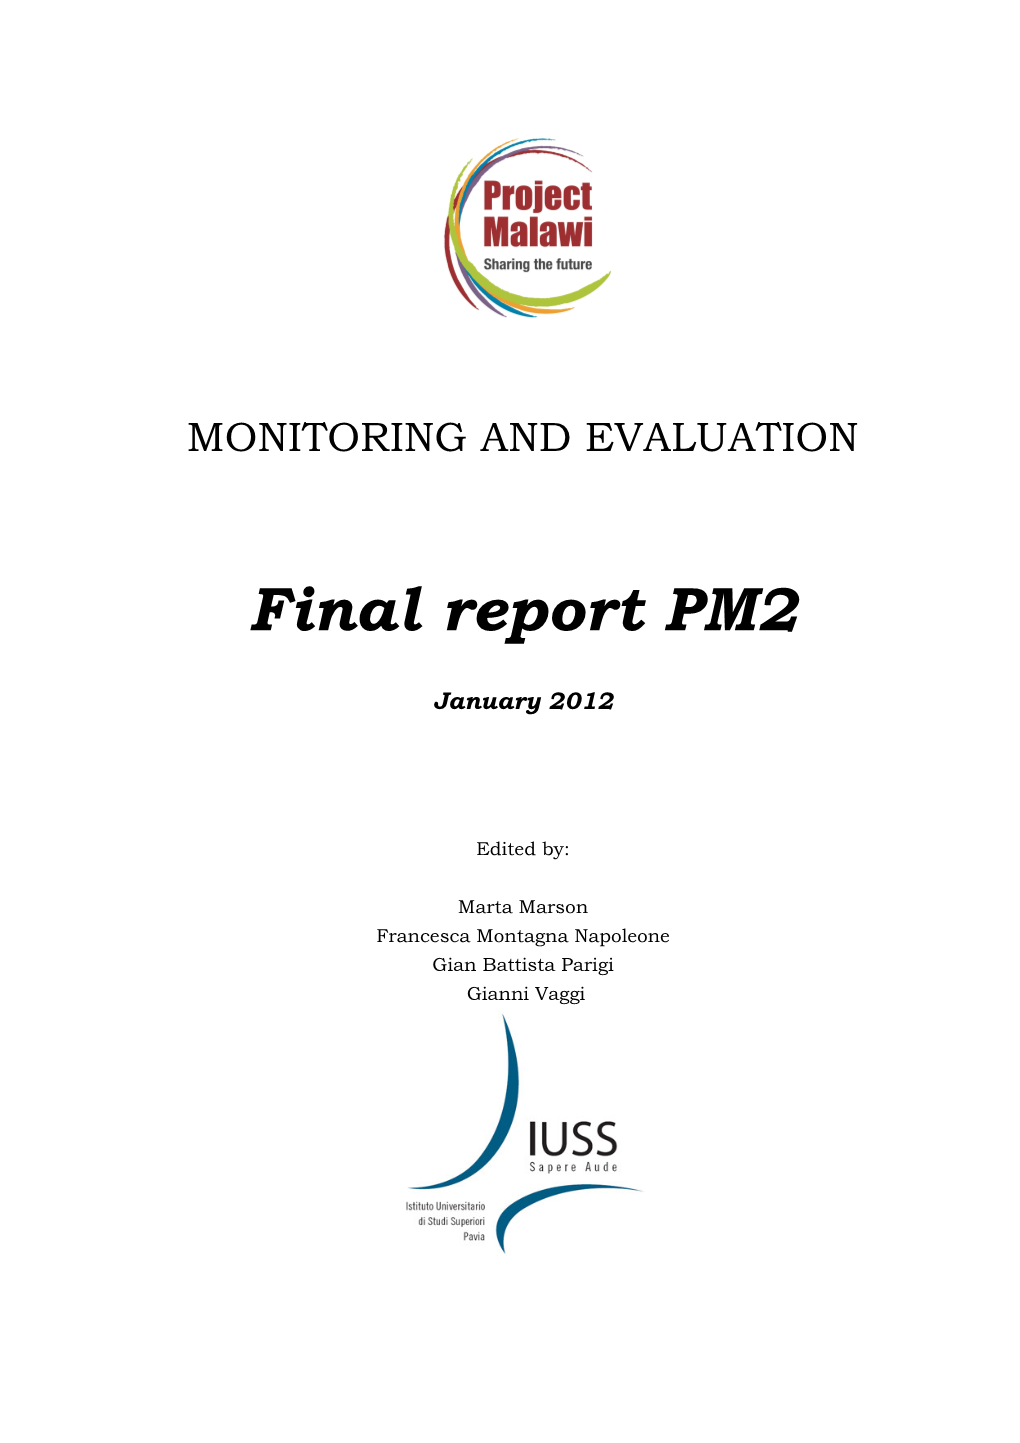 Final Report PM2